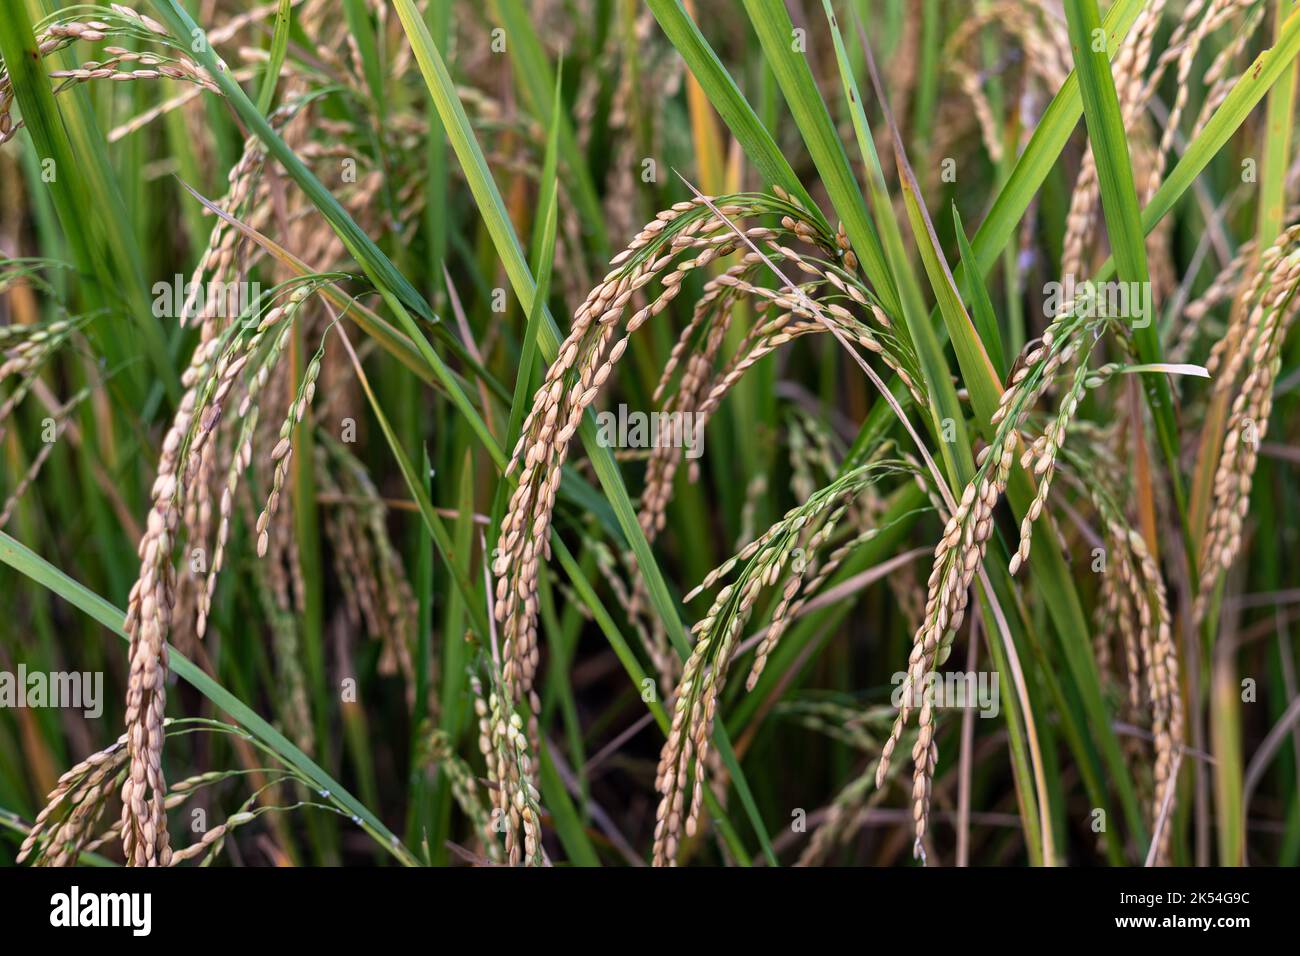 Ears of ripe rice closeup view Stock Photo